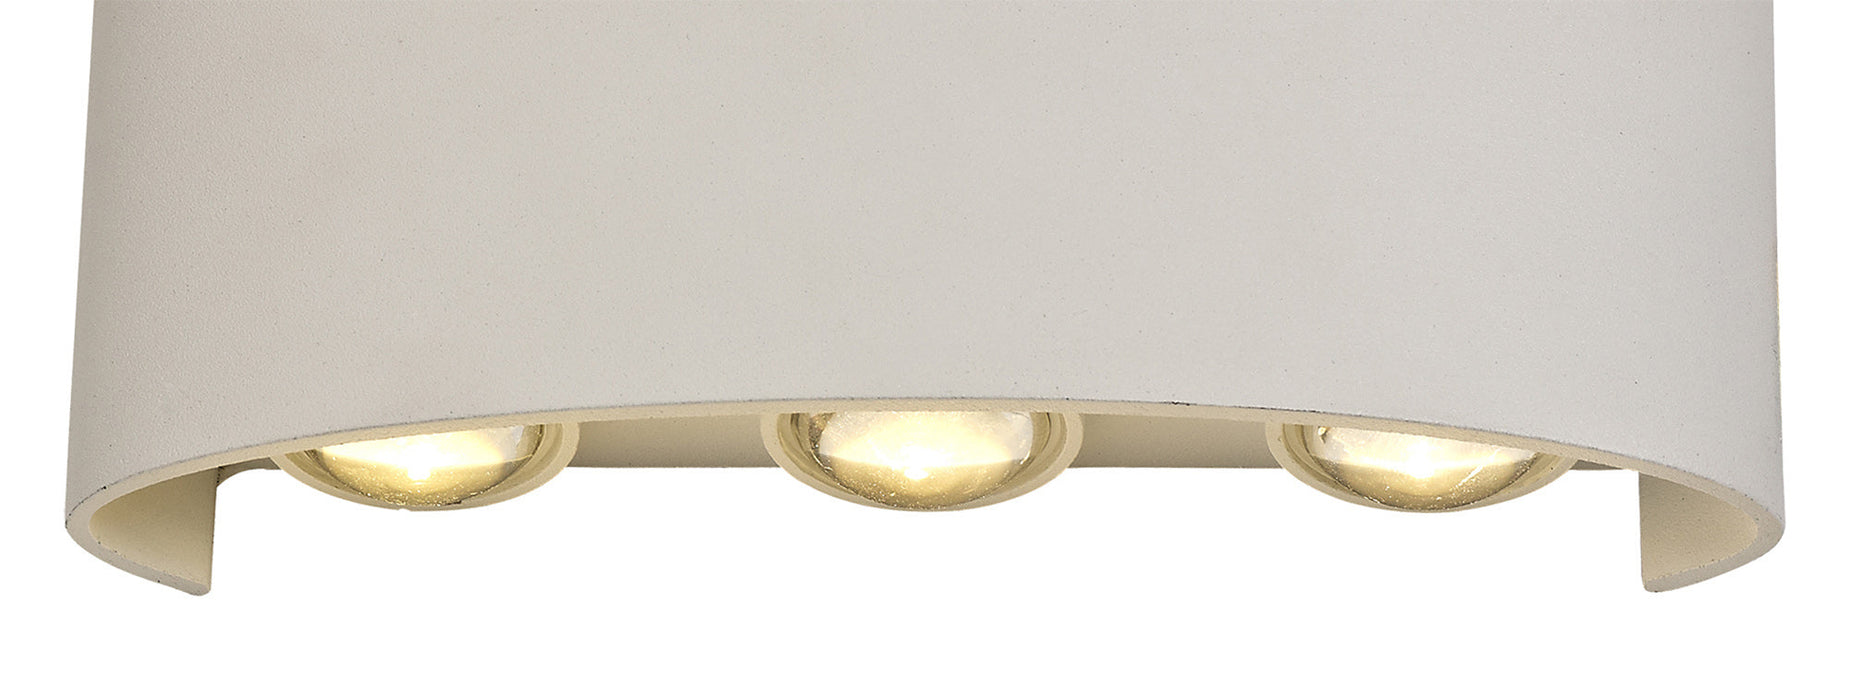 Deco Leoni Up & Downward Lighting Wall Light, 6W LED 3000K, Sand White, 500lm, IP54, 3yrs Warranty • D0450